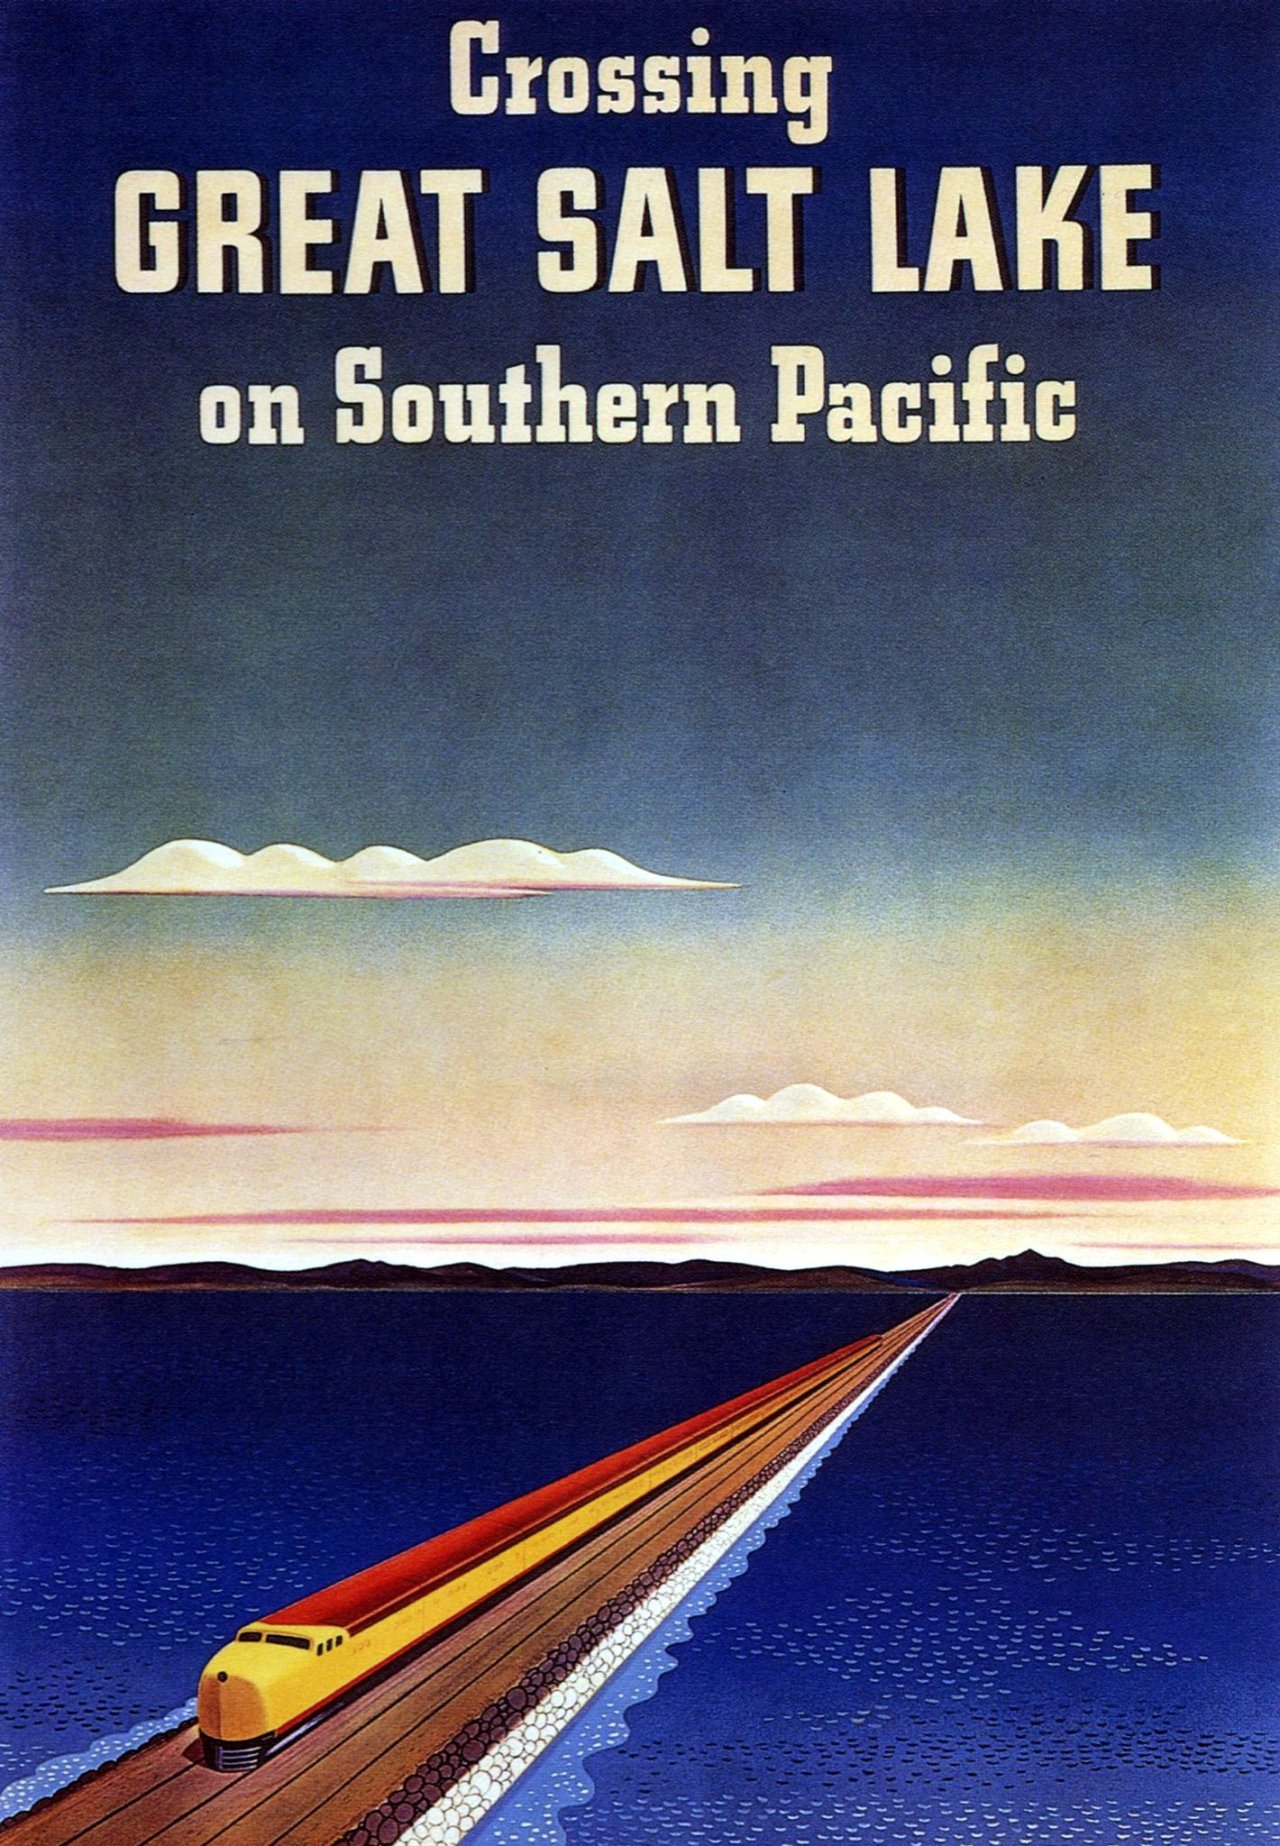 Southern Pacific Railroad - 1940